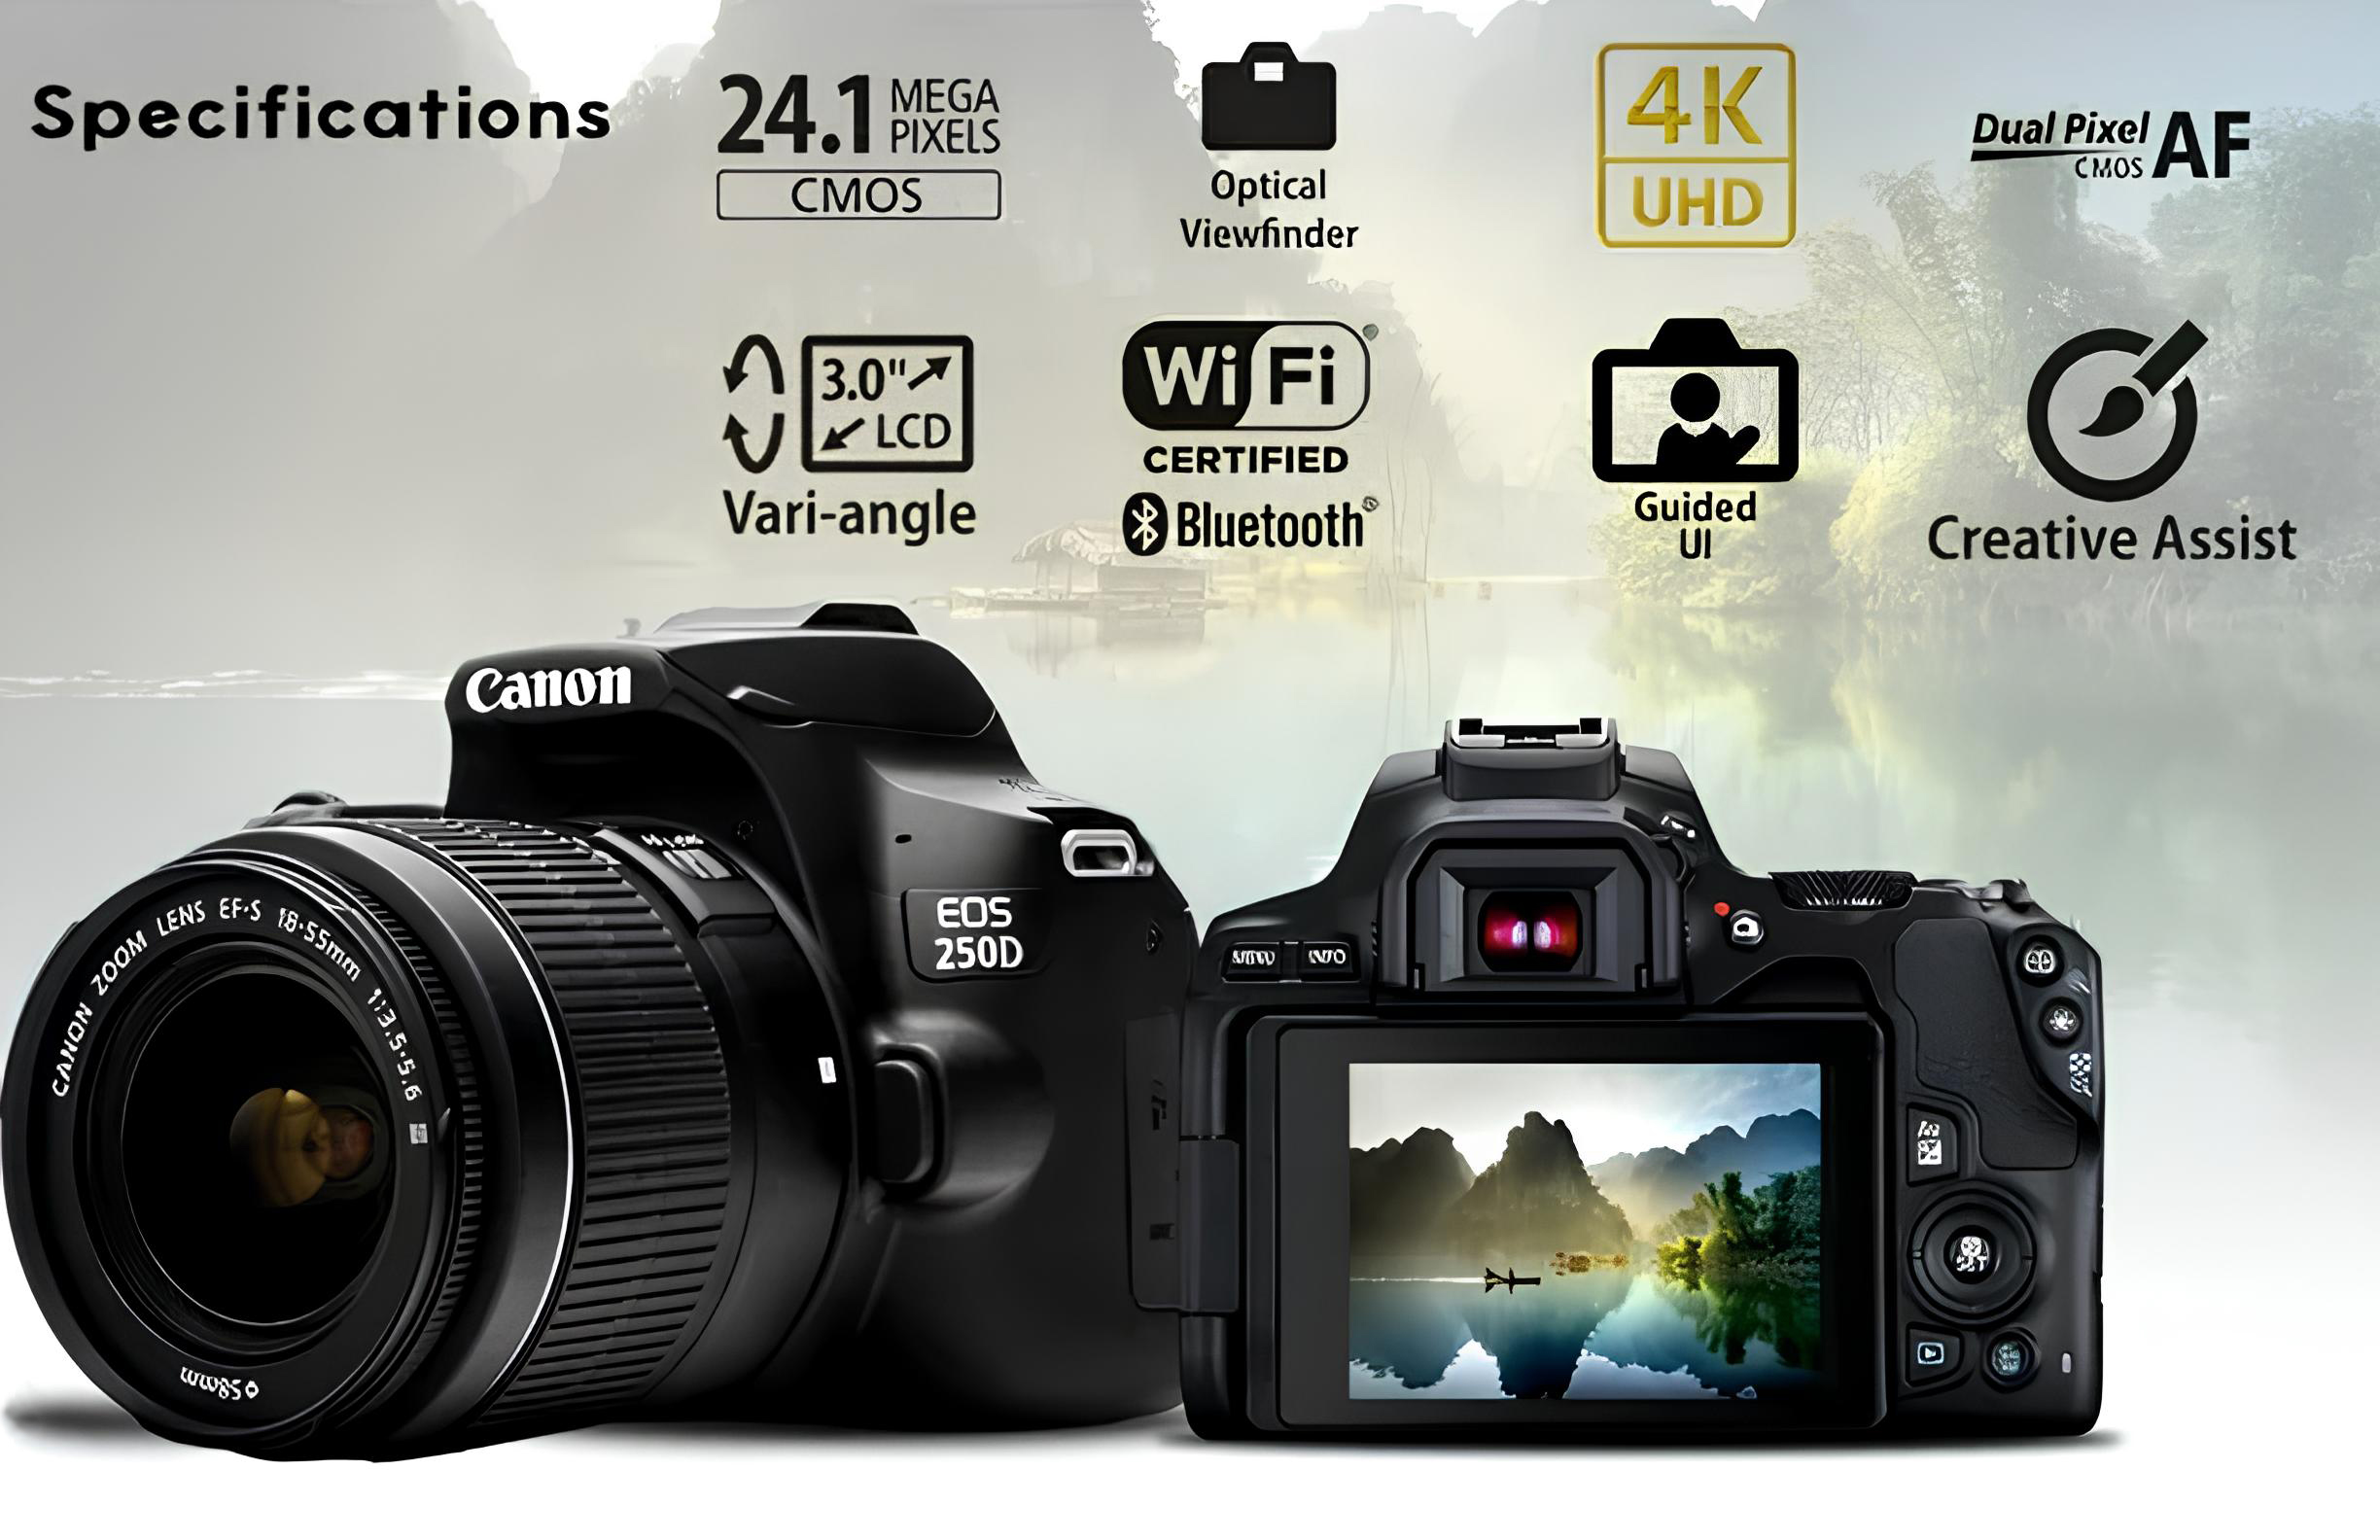 Canon EOS 250D / Rebel SL3 DSLR Camera with 18-55mm Lens (Black) + Creative Filter Set, EOS Camera Bag +  Sandisk Ultra 64GB Card + Electronics Cleaning Set, And More (International Model) - image 4 of 7